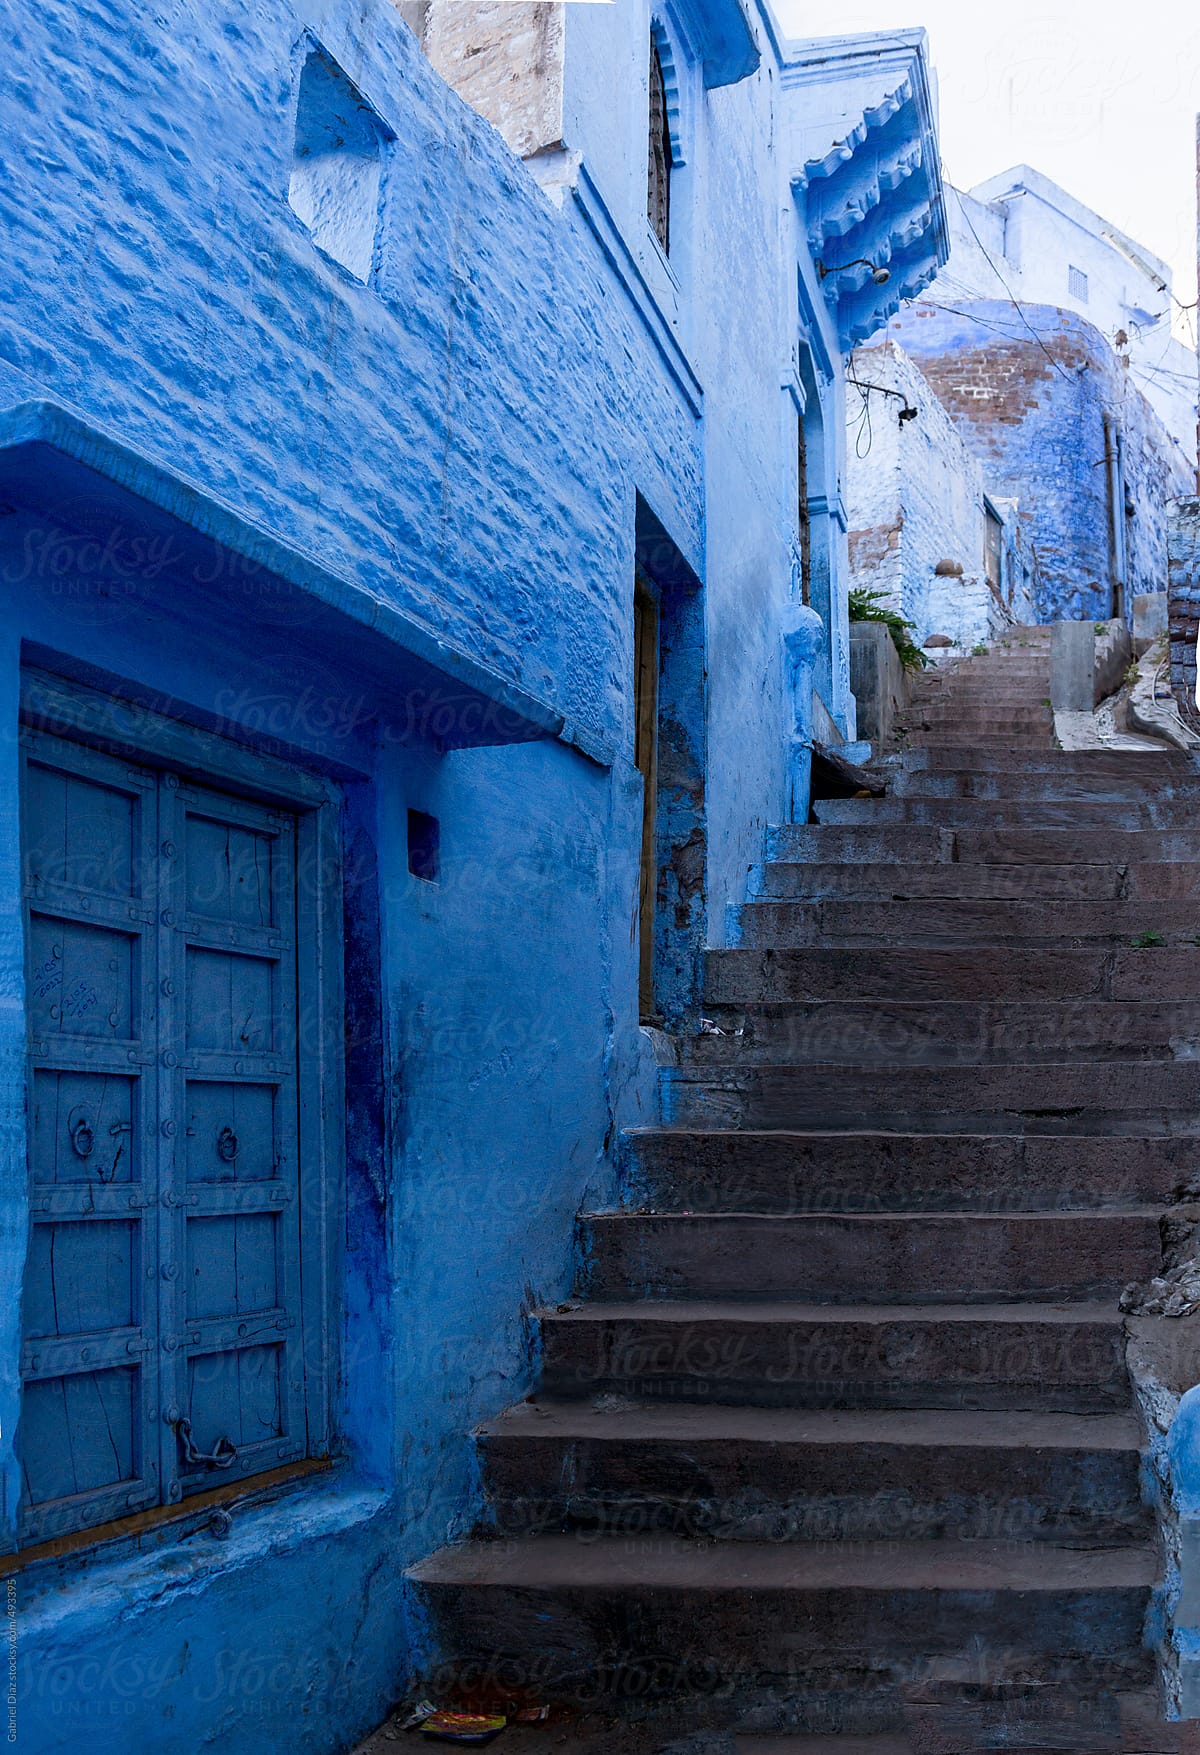 Streets in Jodhpur, the blue city. India.